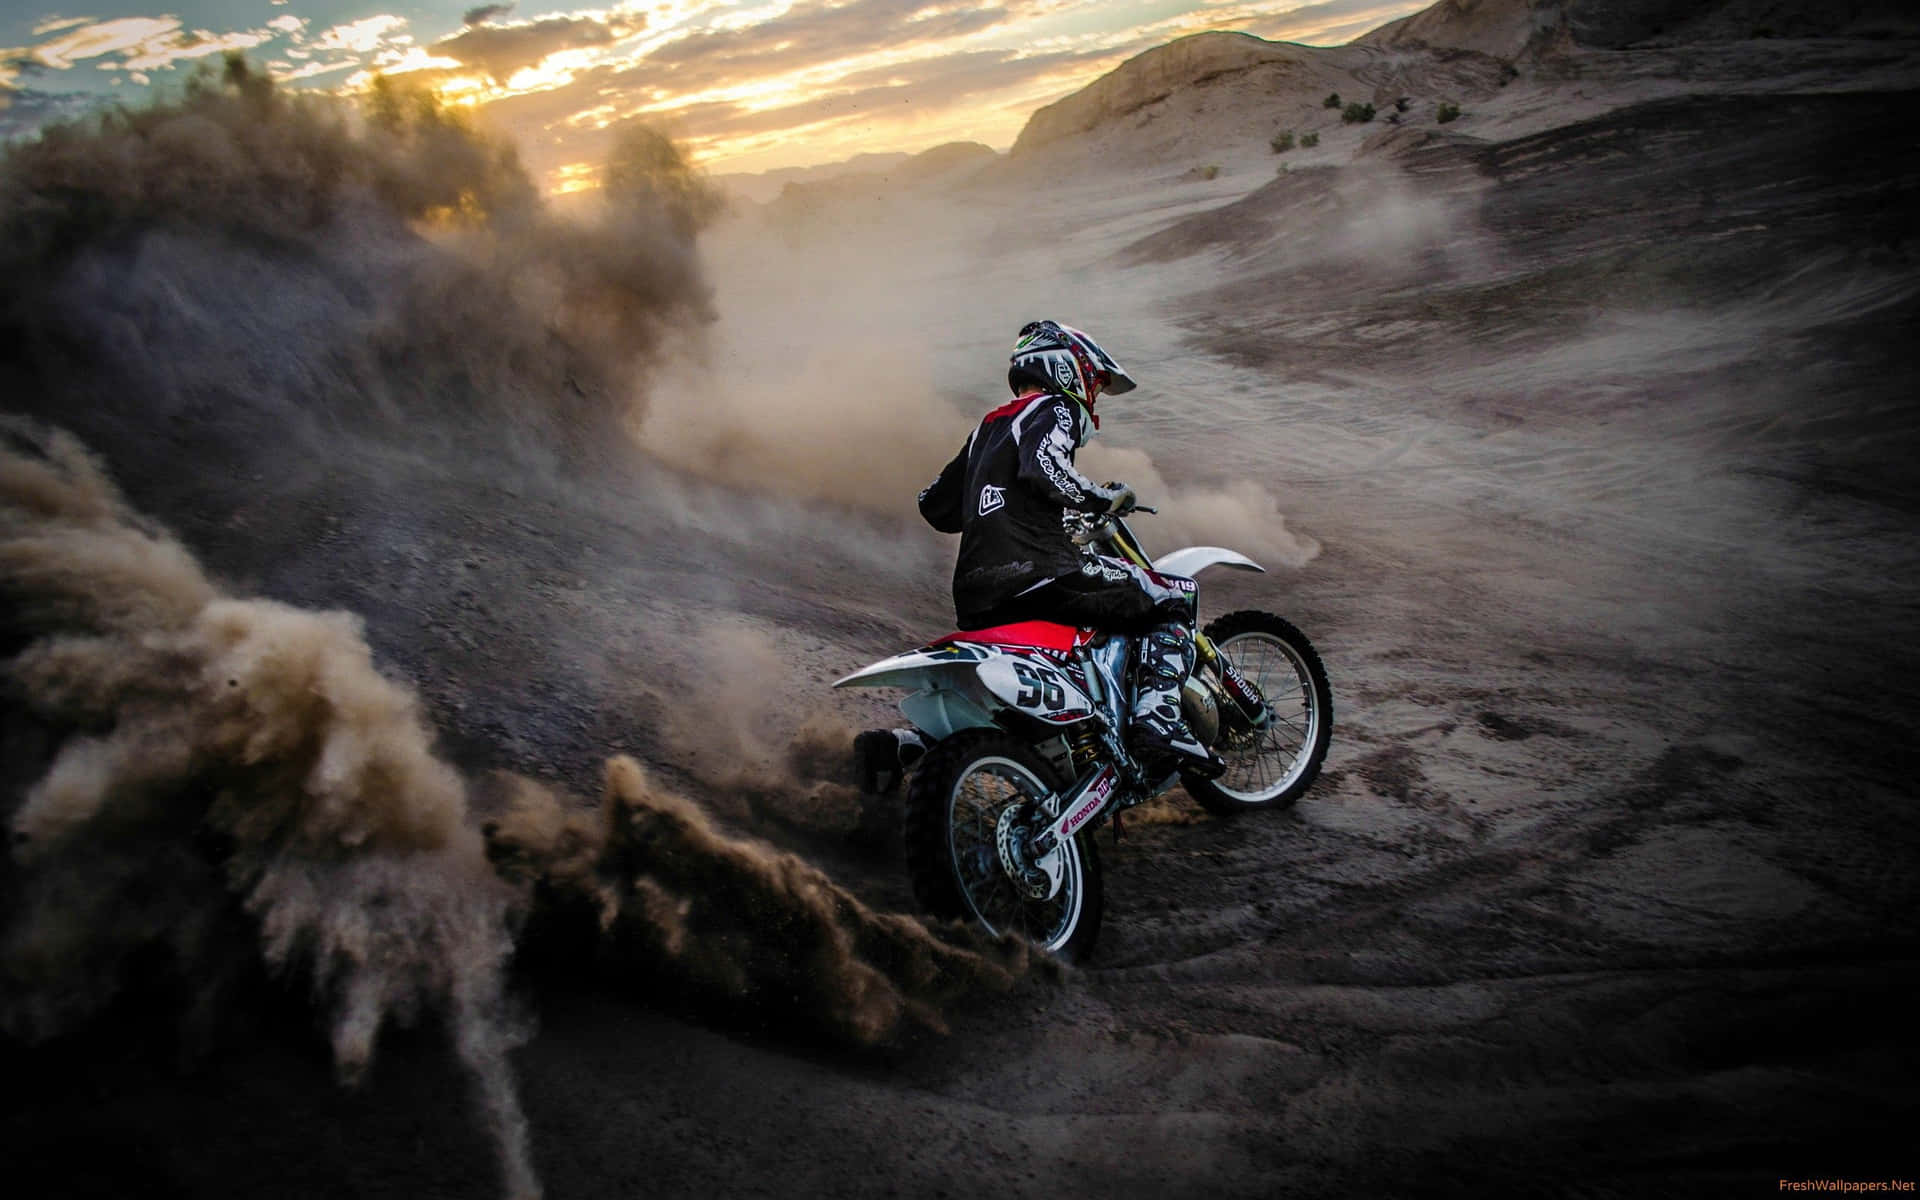 "Ready to Tear Up the Trails: A Honda Dirt Bike" Wallpaper